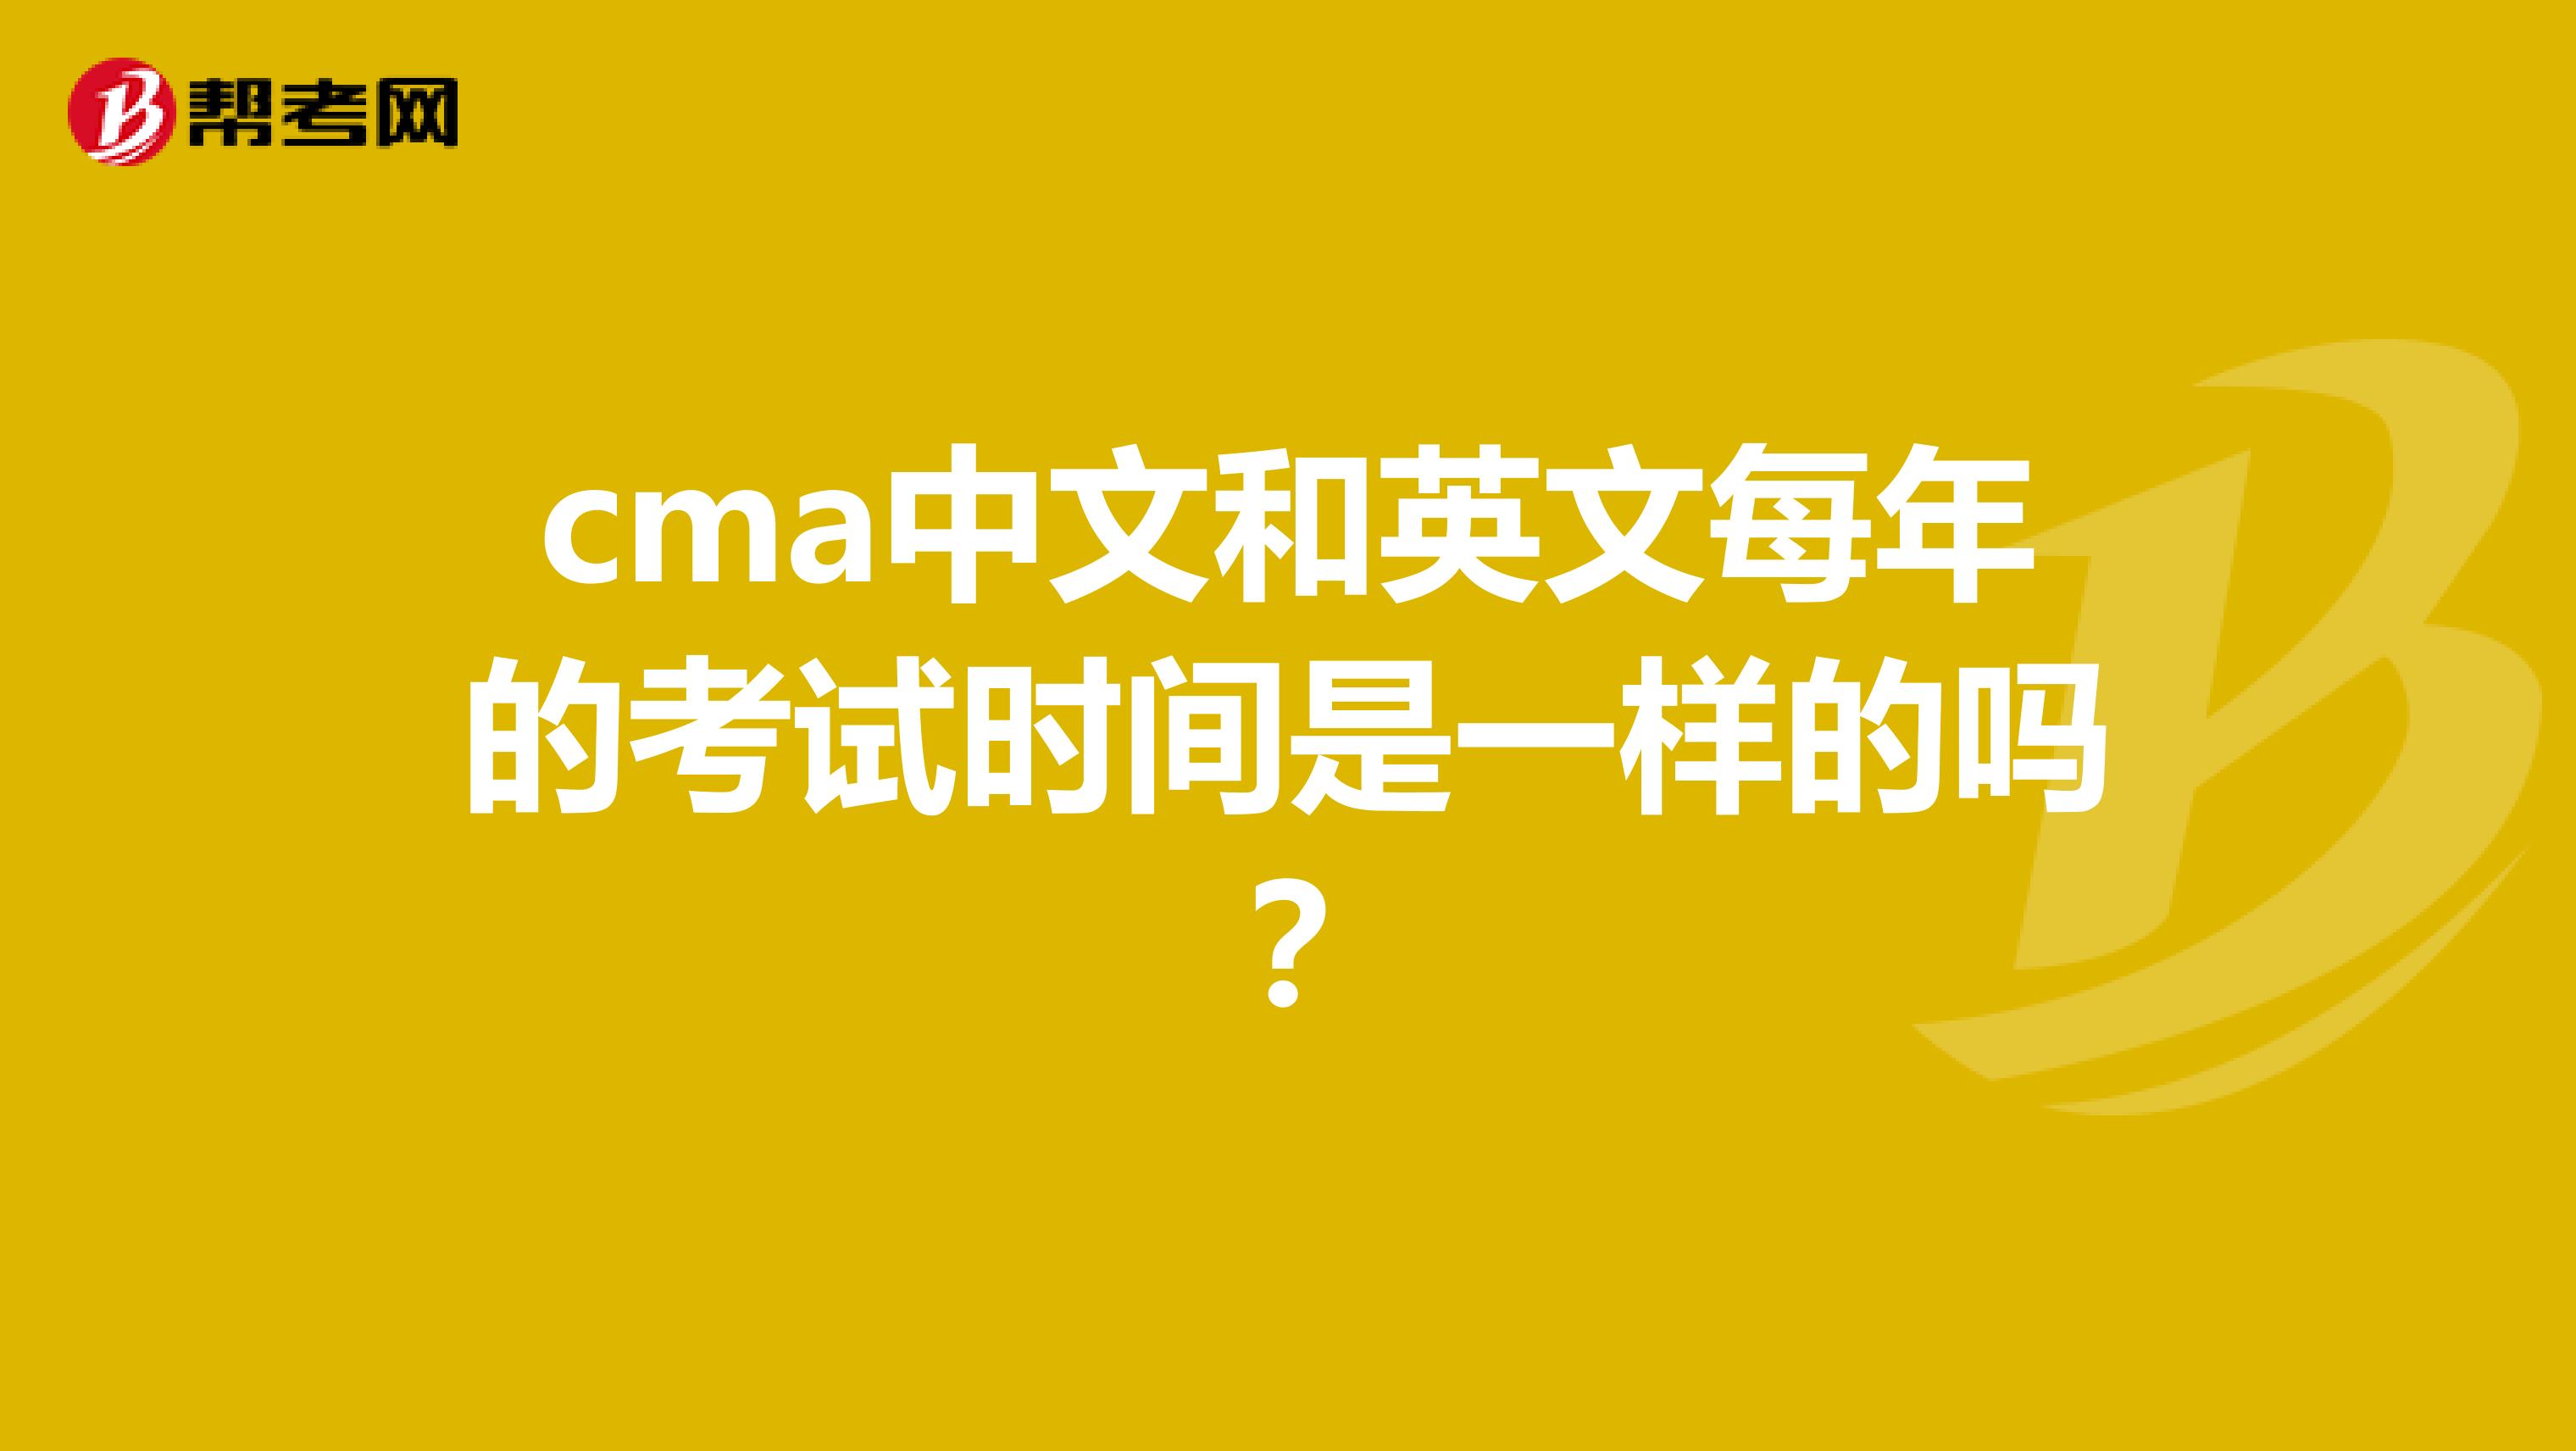 cma中文和英文每年的考试时间是一样的吗？